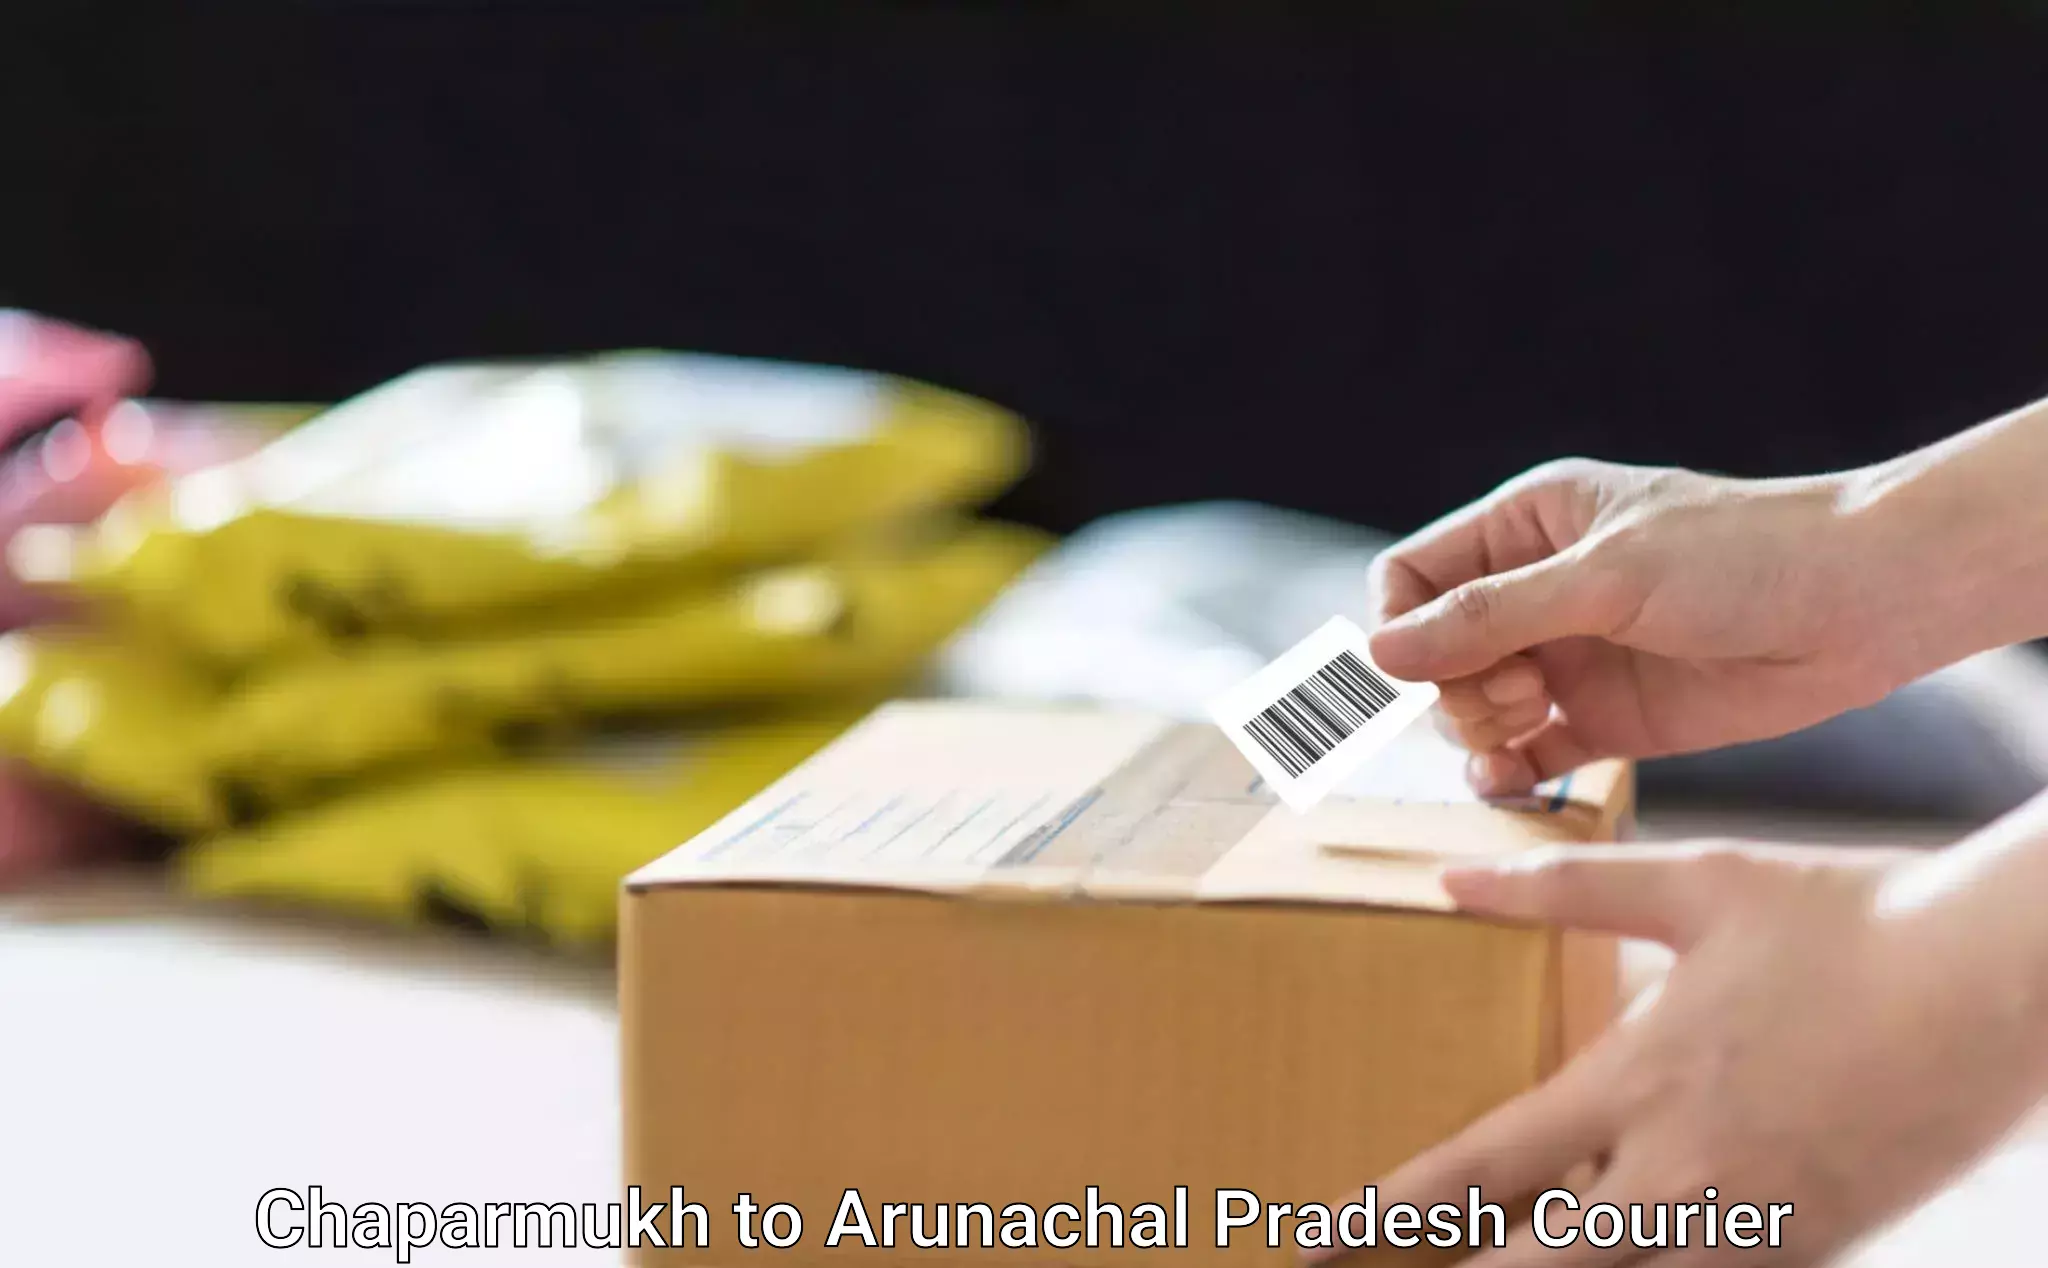 Efficient order fulfillment Chaparmukh to Arunachal Pradesh